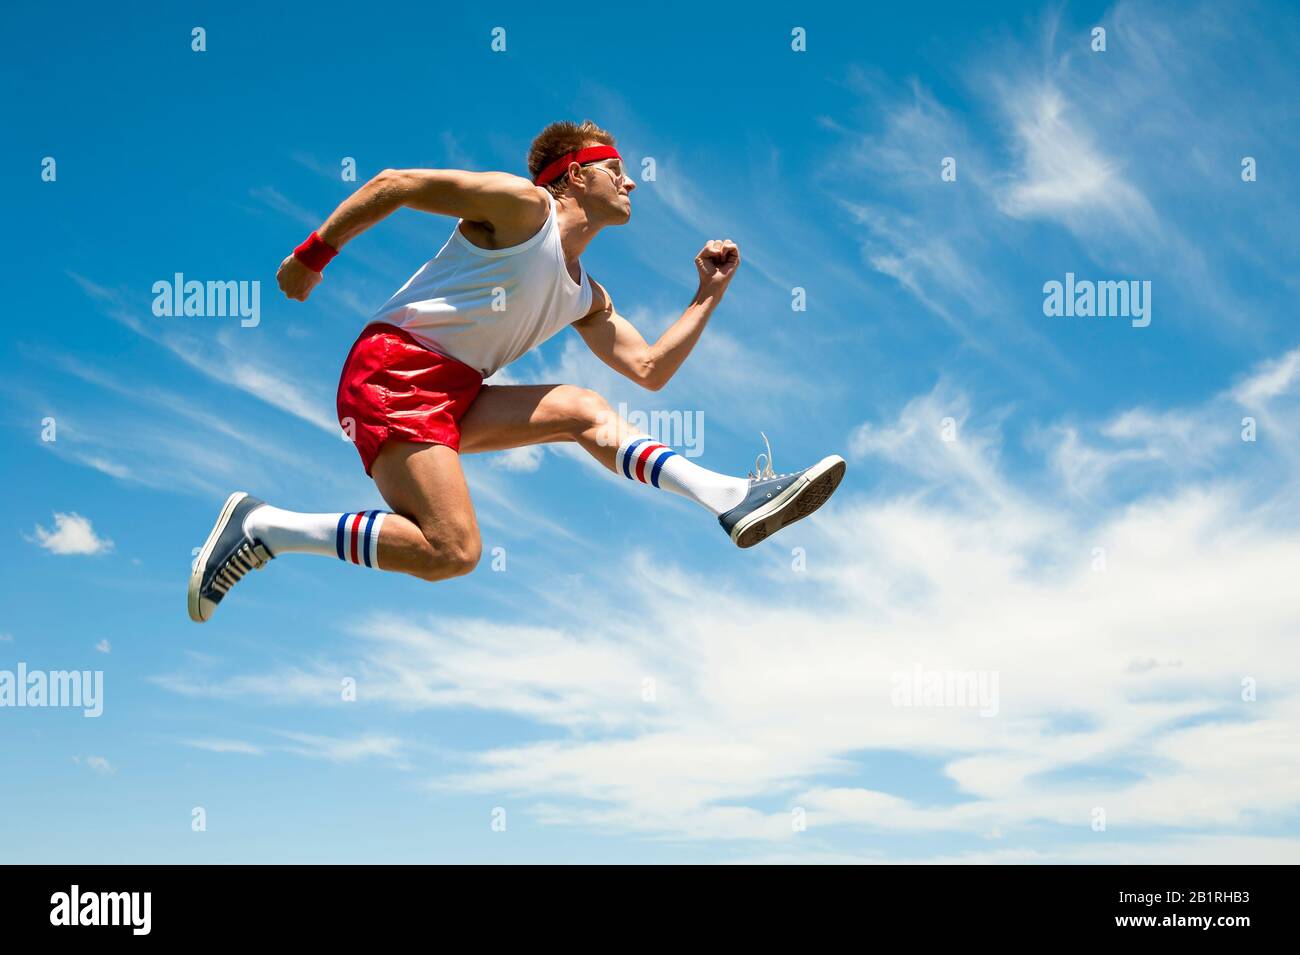 Skinny nerd athlete leaping in the long jump wearing vintage